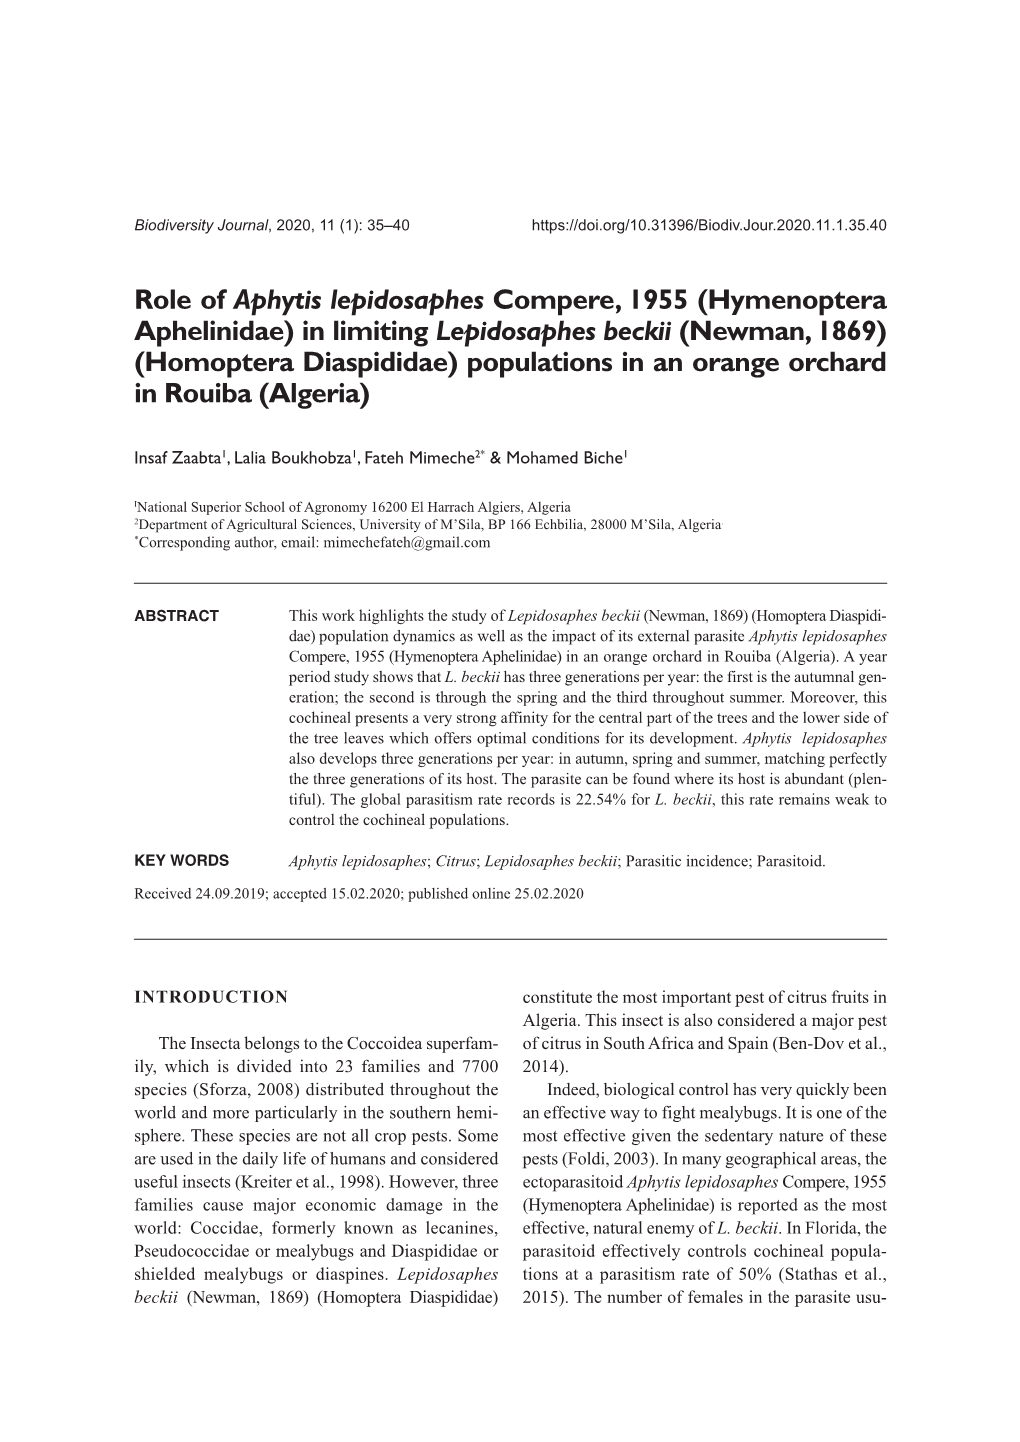 Role of Aphytis Lepidosaphes Compere, 1955 (Hymenoptera Aphelinidae)